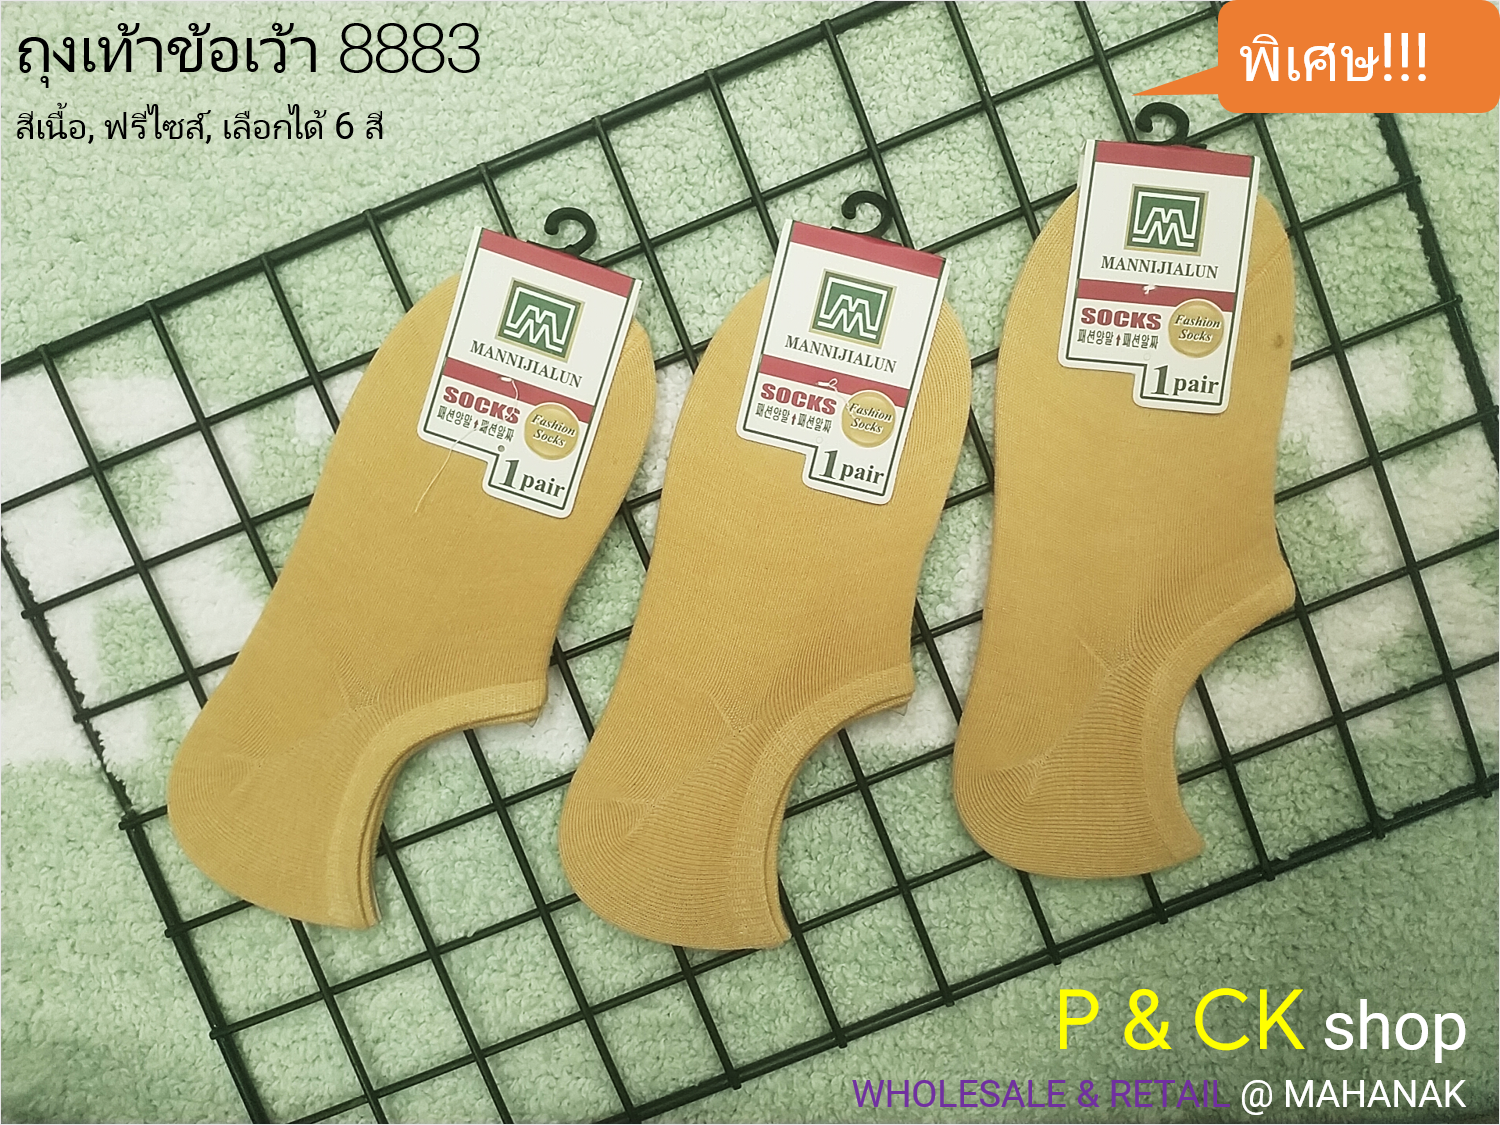 P & CK / ถุงเท้าผู้ชายข้อเว้าฟรีไซส์ #8883 [ขายเป็นคู่]: สีพื้น, เลือกได้ 6 สี, กรุณาเลือกให้ดี [เลือกสีโปรดกด "เพิ่มลงรถเข็น"]